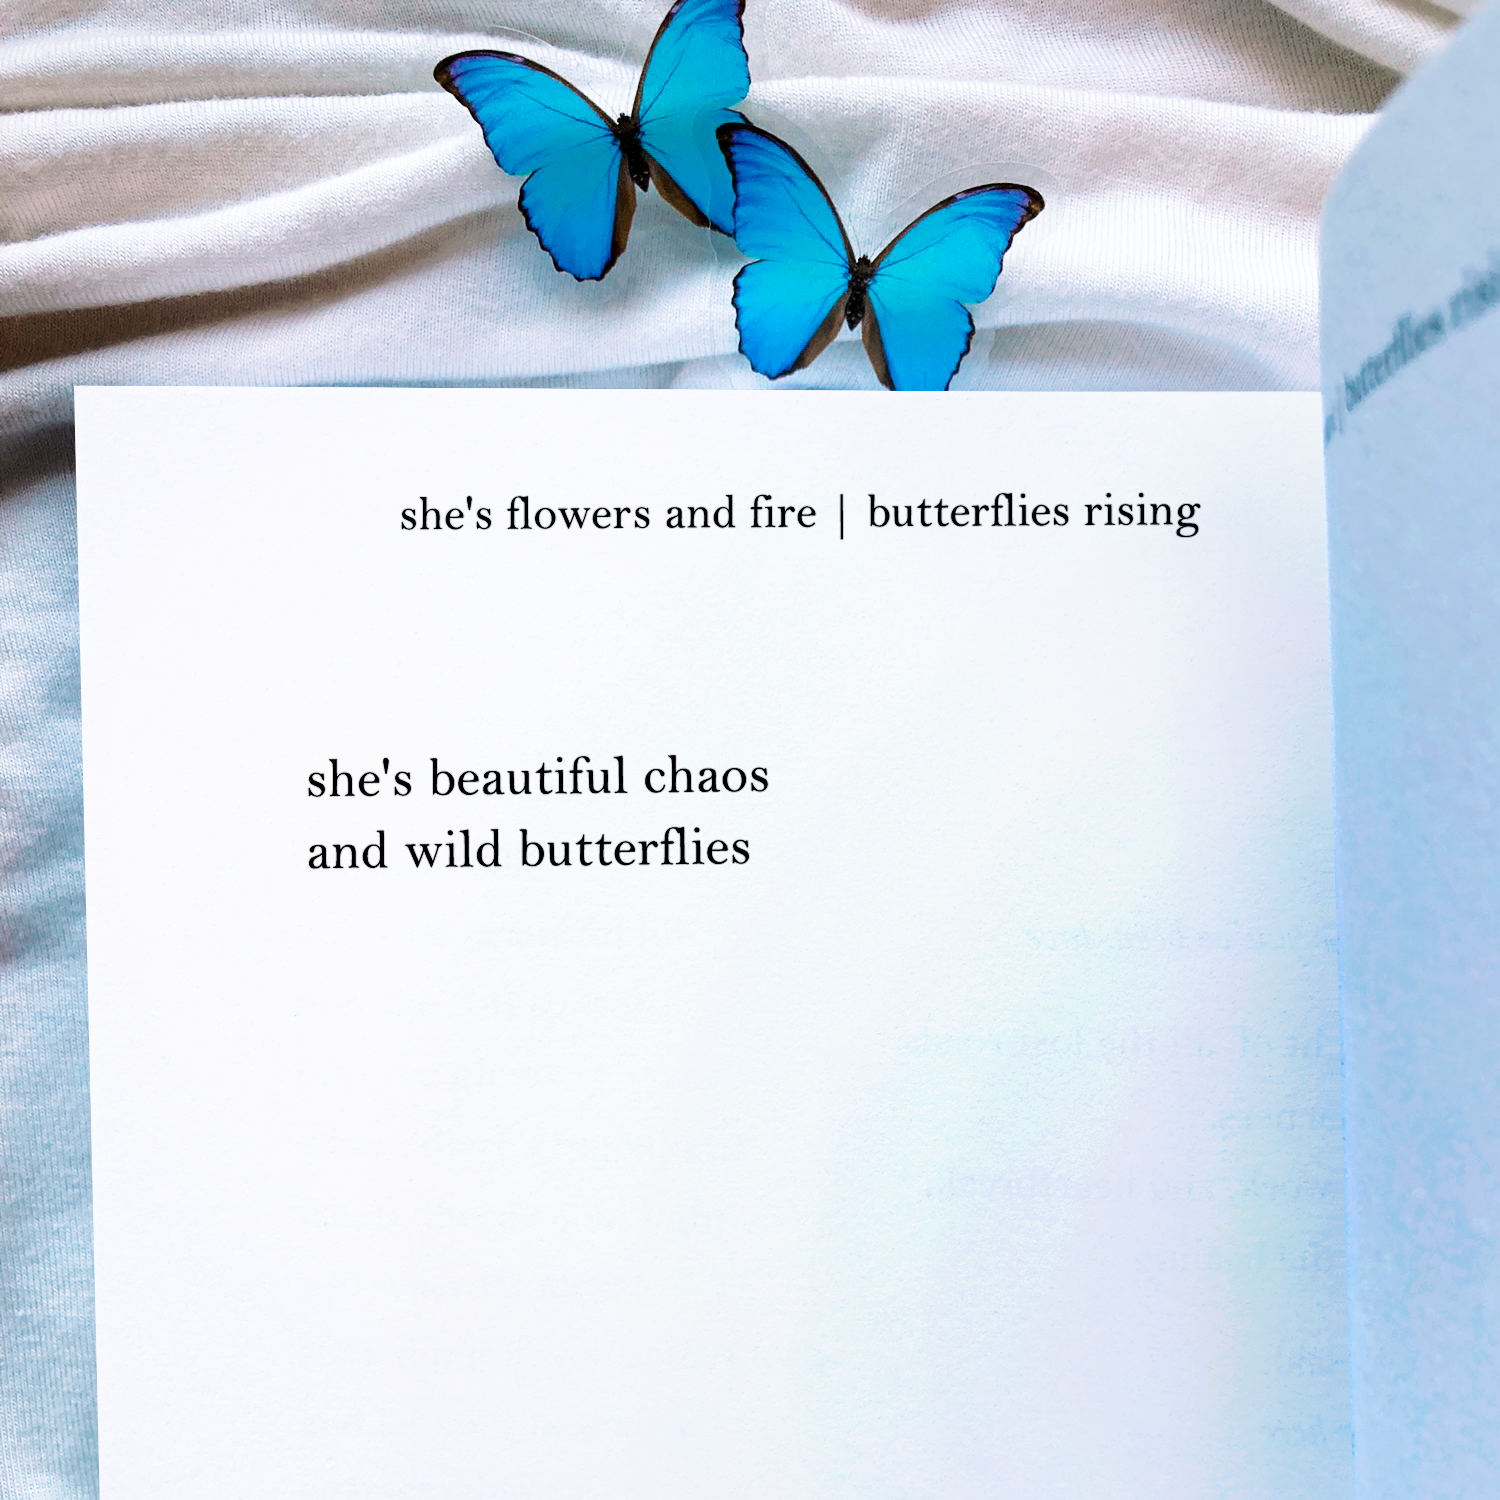 she’s beautiful chaos and wild butterflies